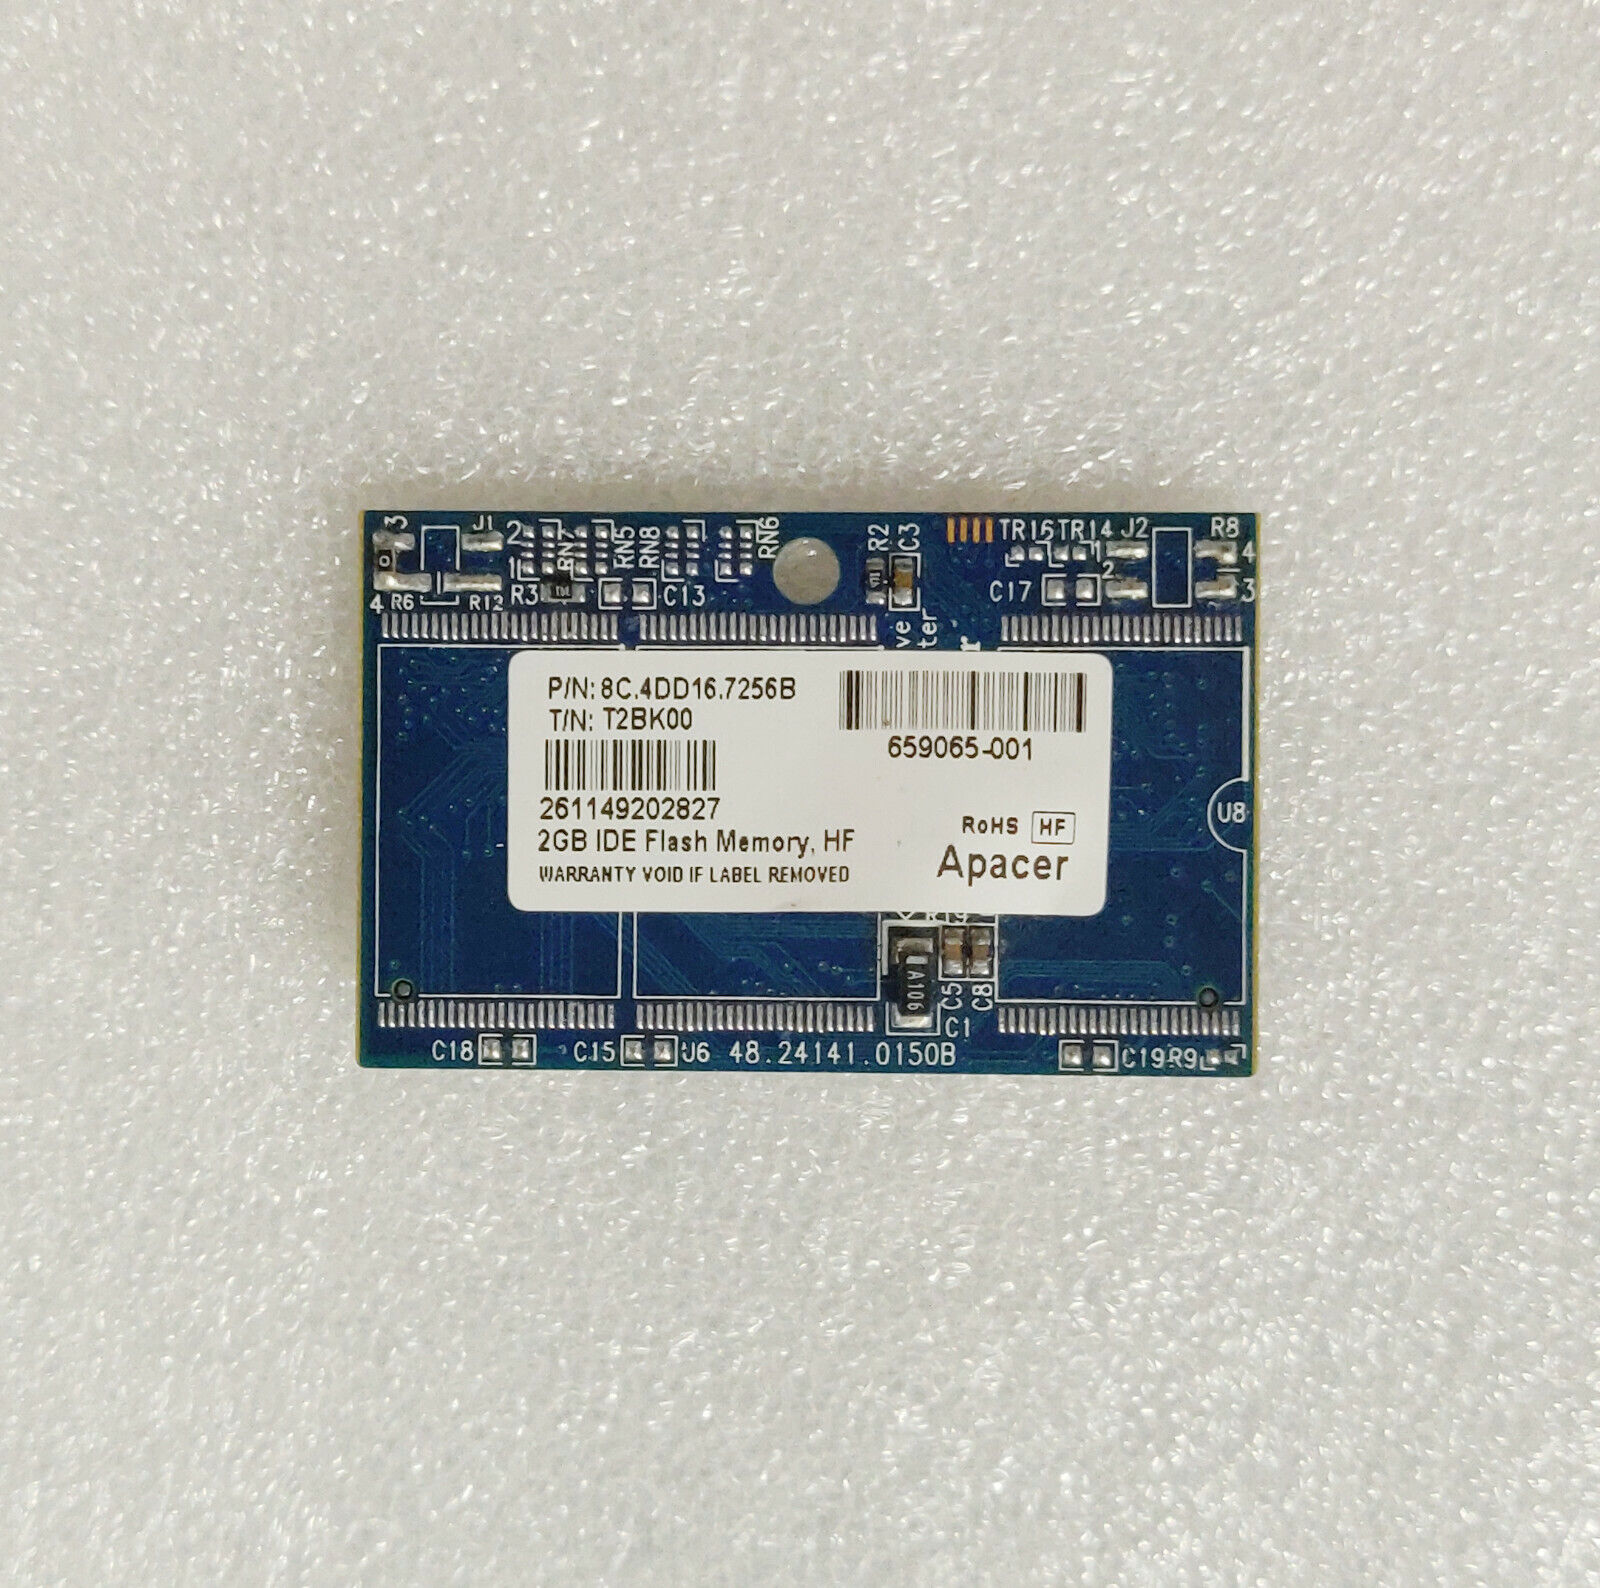 3Pcs Apacer 2GB IDE Flash Memory, HF  44PIN Horizontal electronic disk DOM